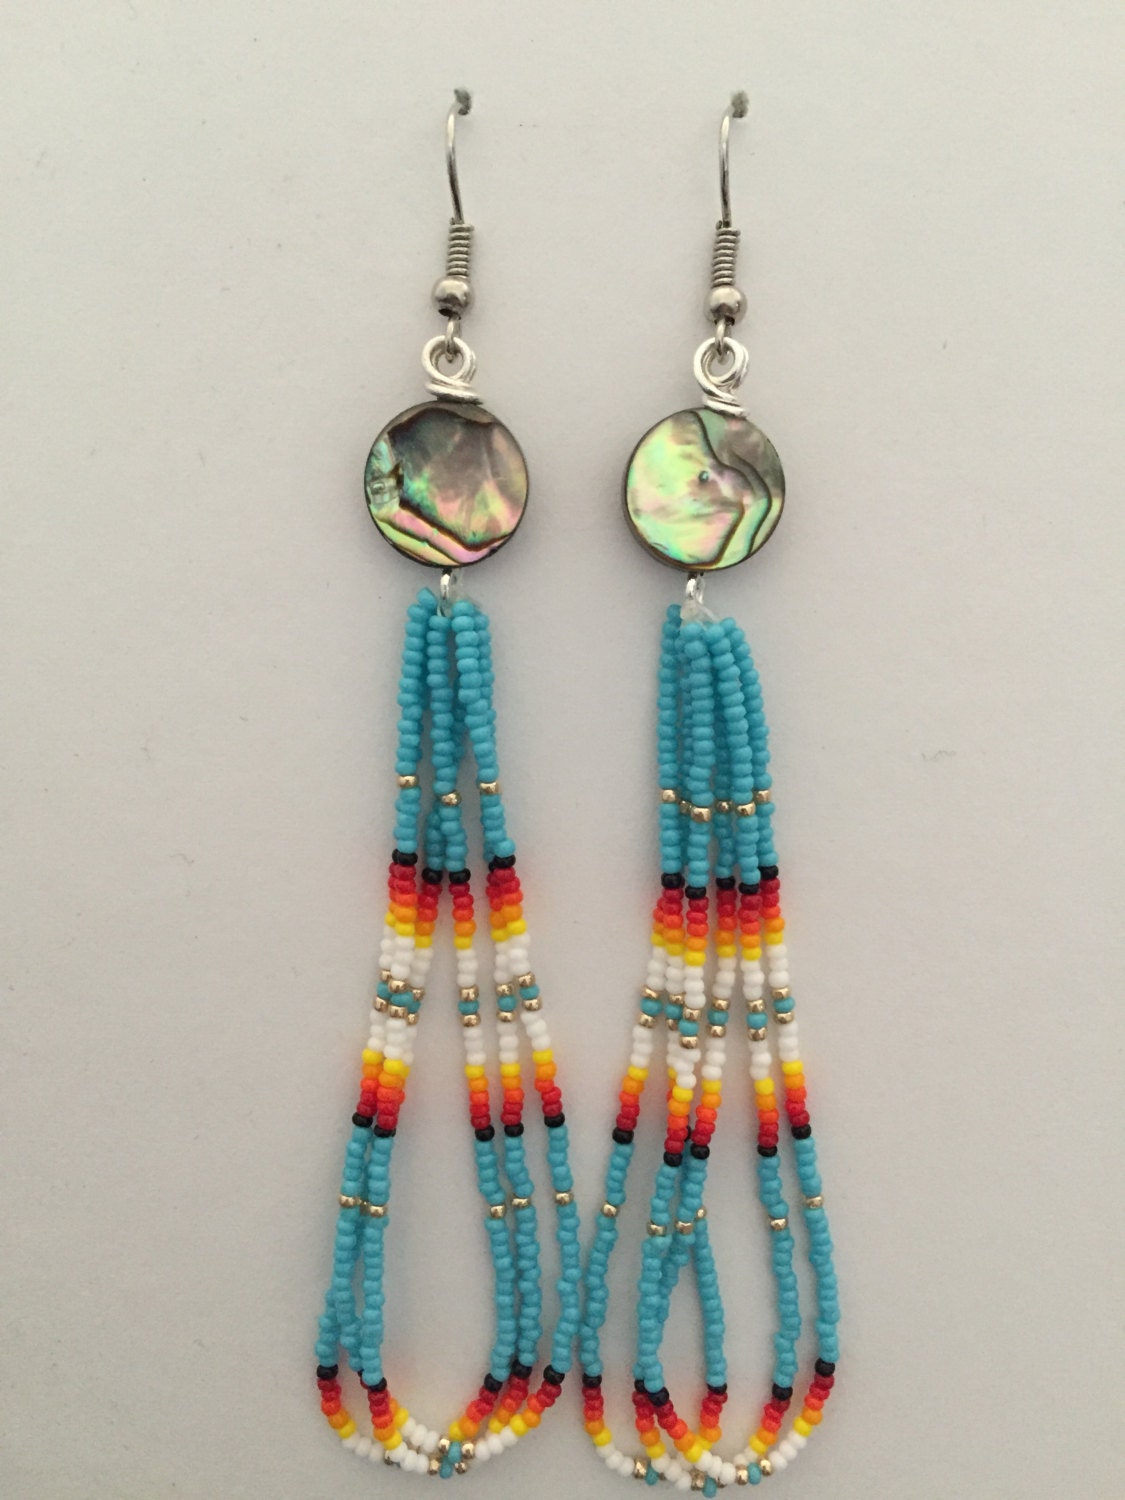 Handmade Native American Beaded Earrings